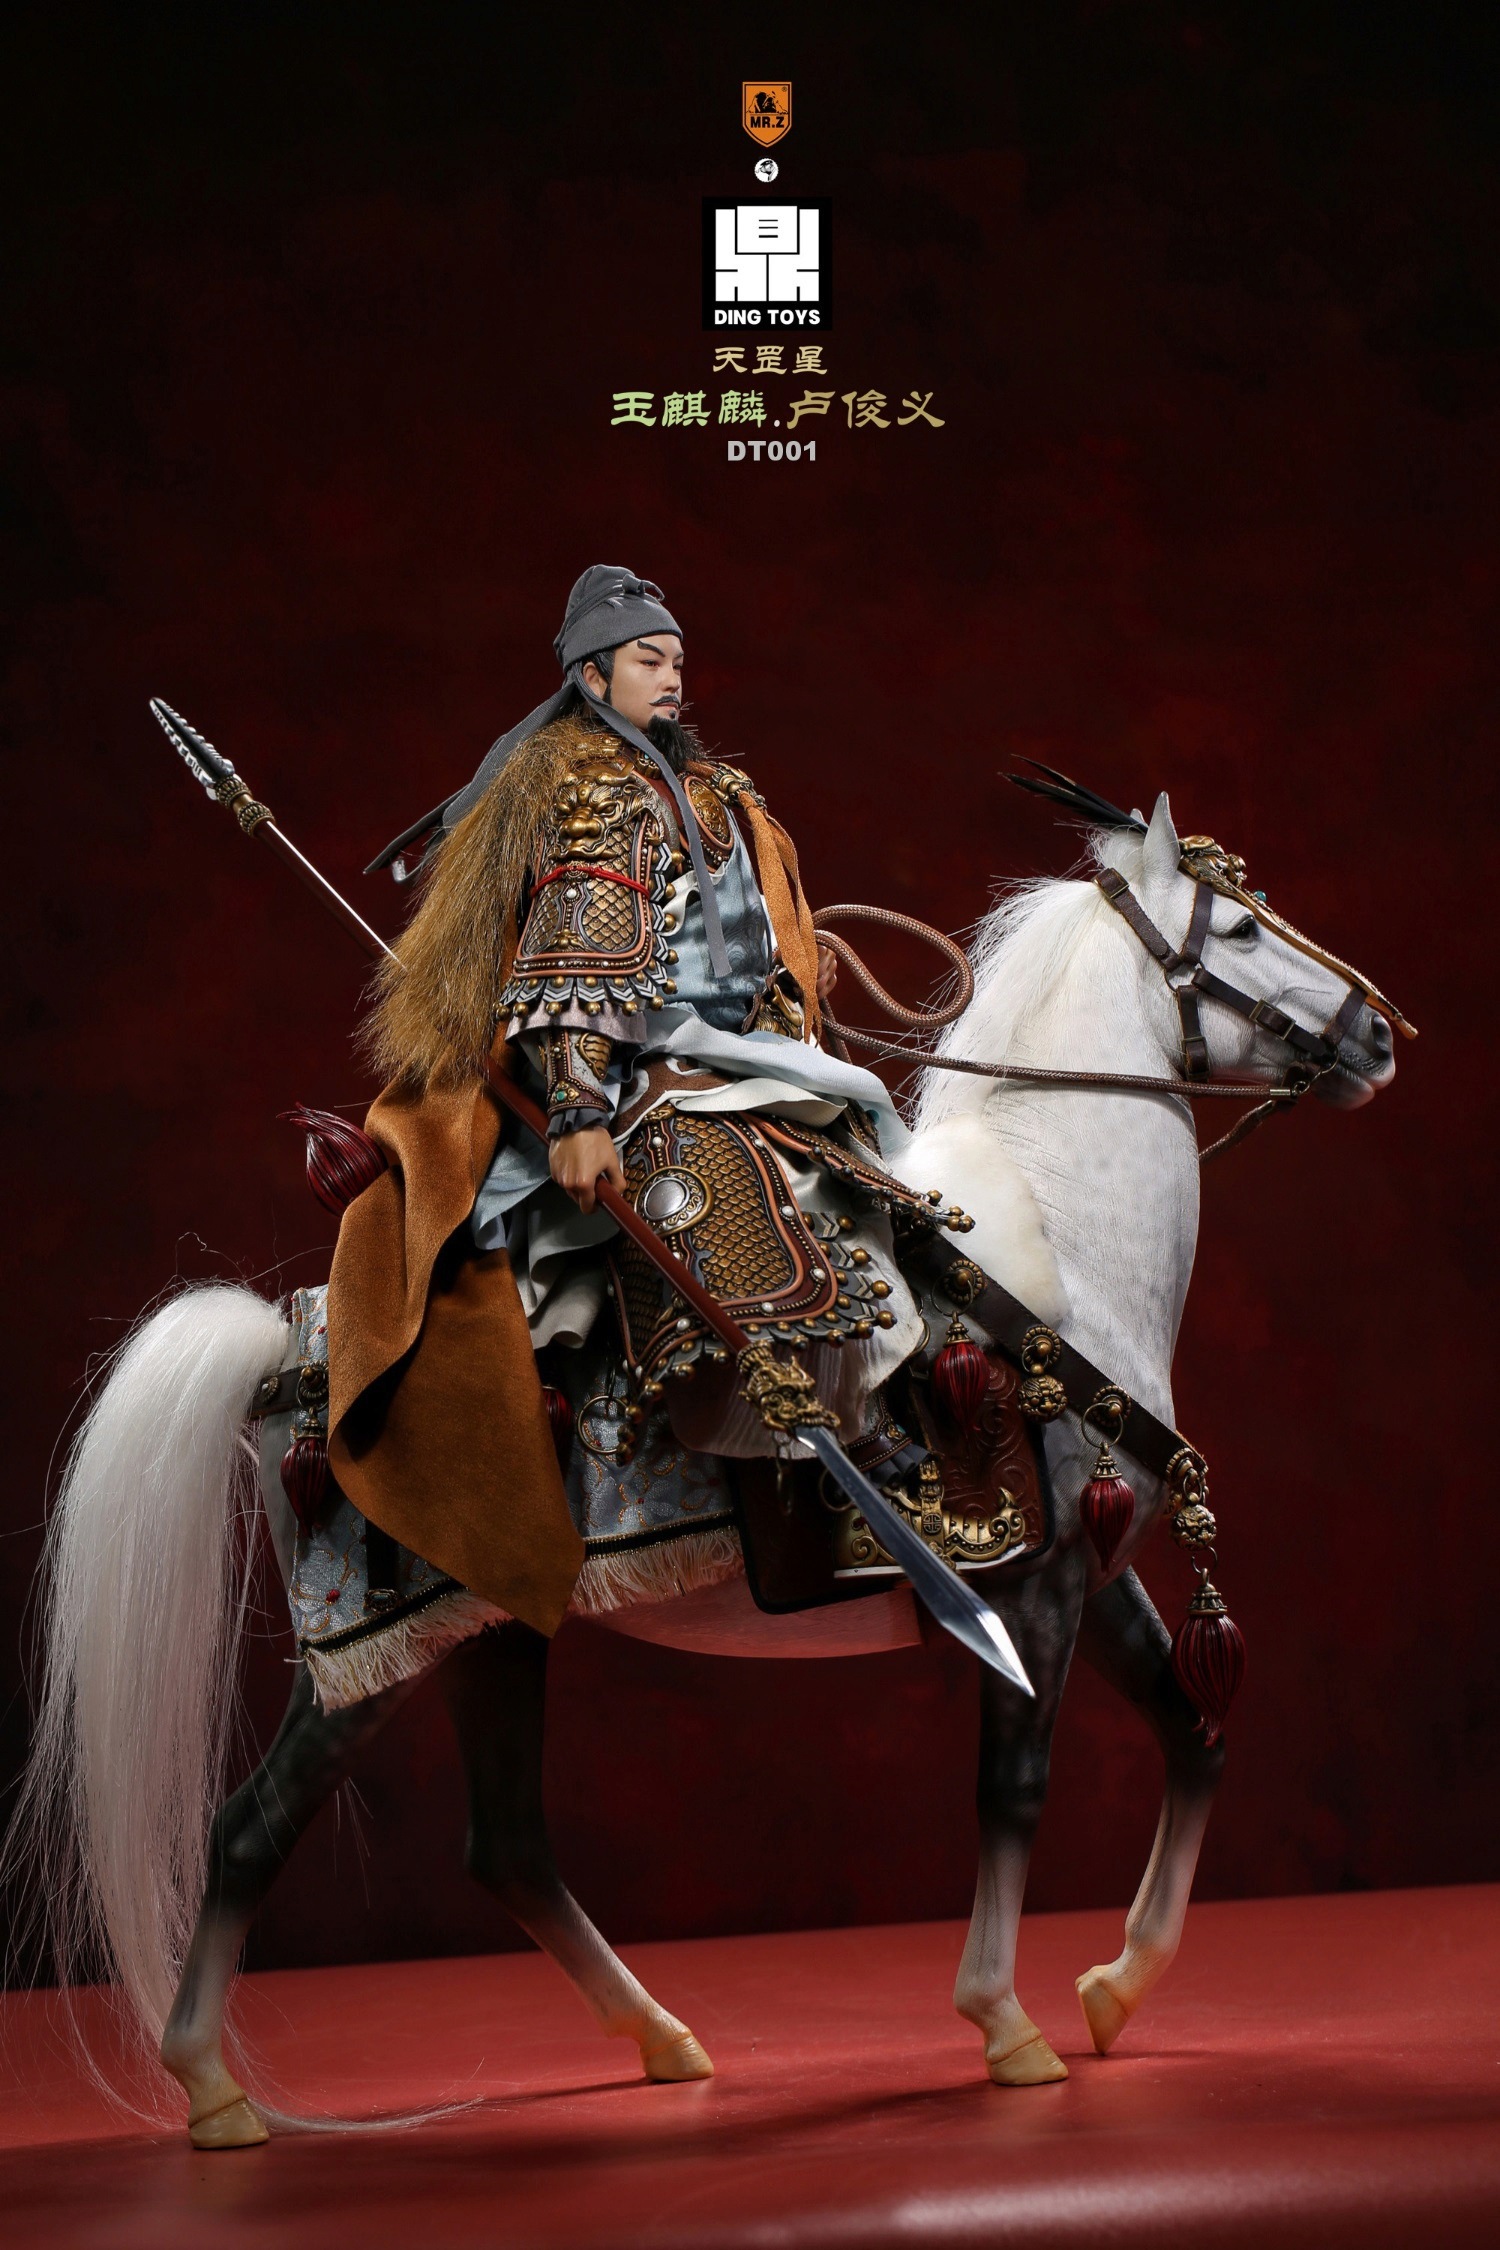 DingToys - NEW PRODUCT: Mr.Z X DING TOYS - Tiangang Star Jade Qilin-Lu Junyi / war horse Qilin beast #DT001 14125